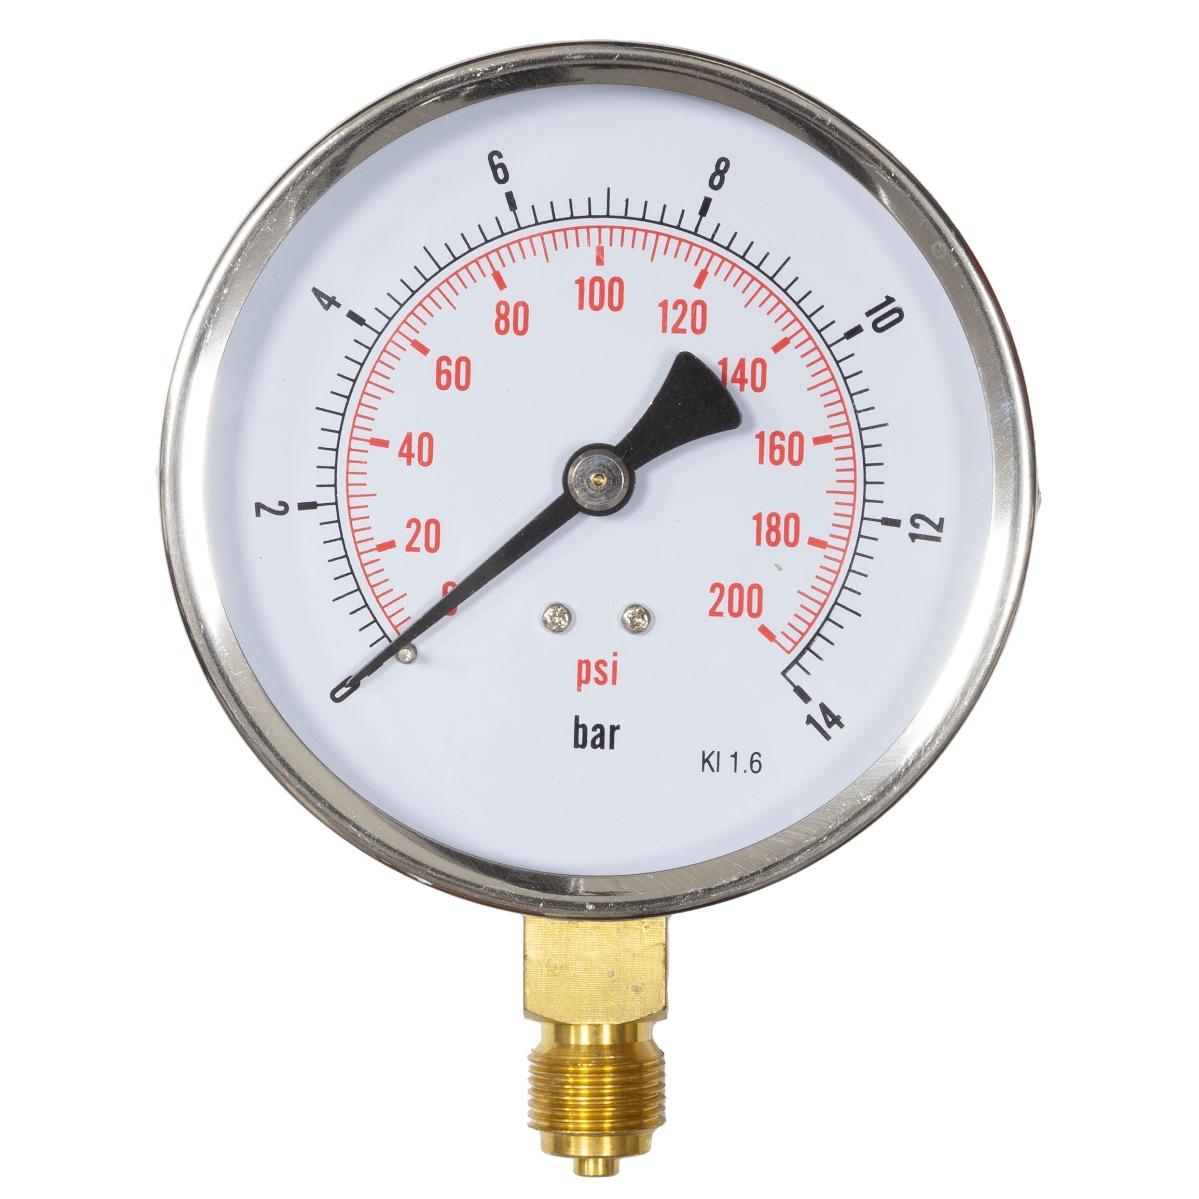 4" Dial Pressure Gauge 0-200 PSI/Bar 3/8" BSP Bottom Connection